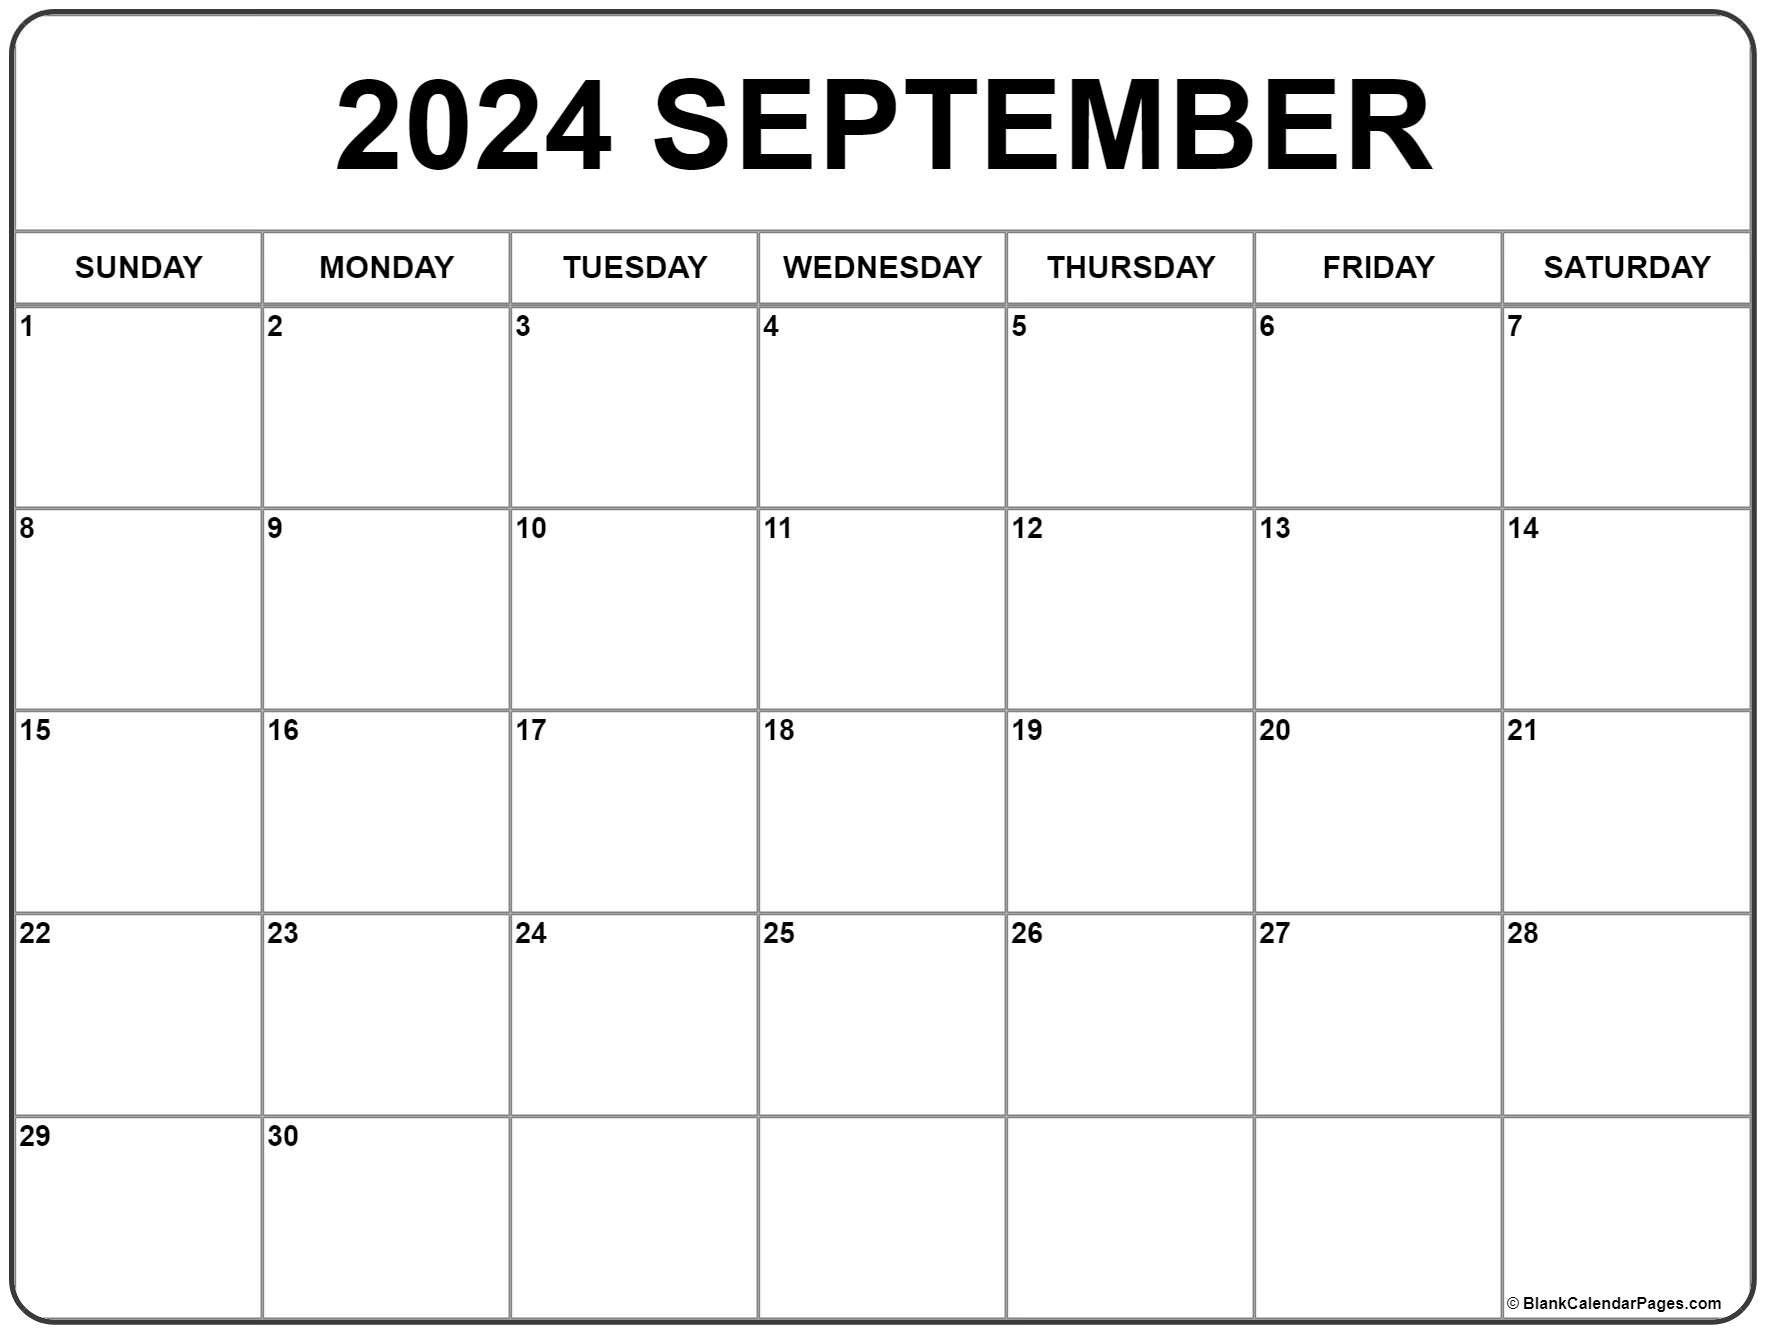 Calendar September 2021 Printable September 2021 calendar | free printable monthly calendars